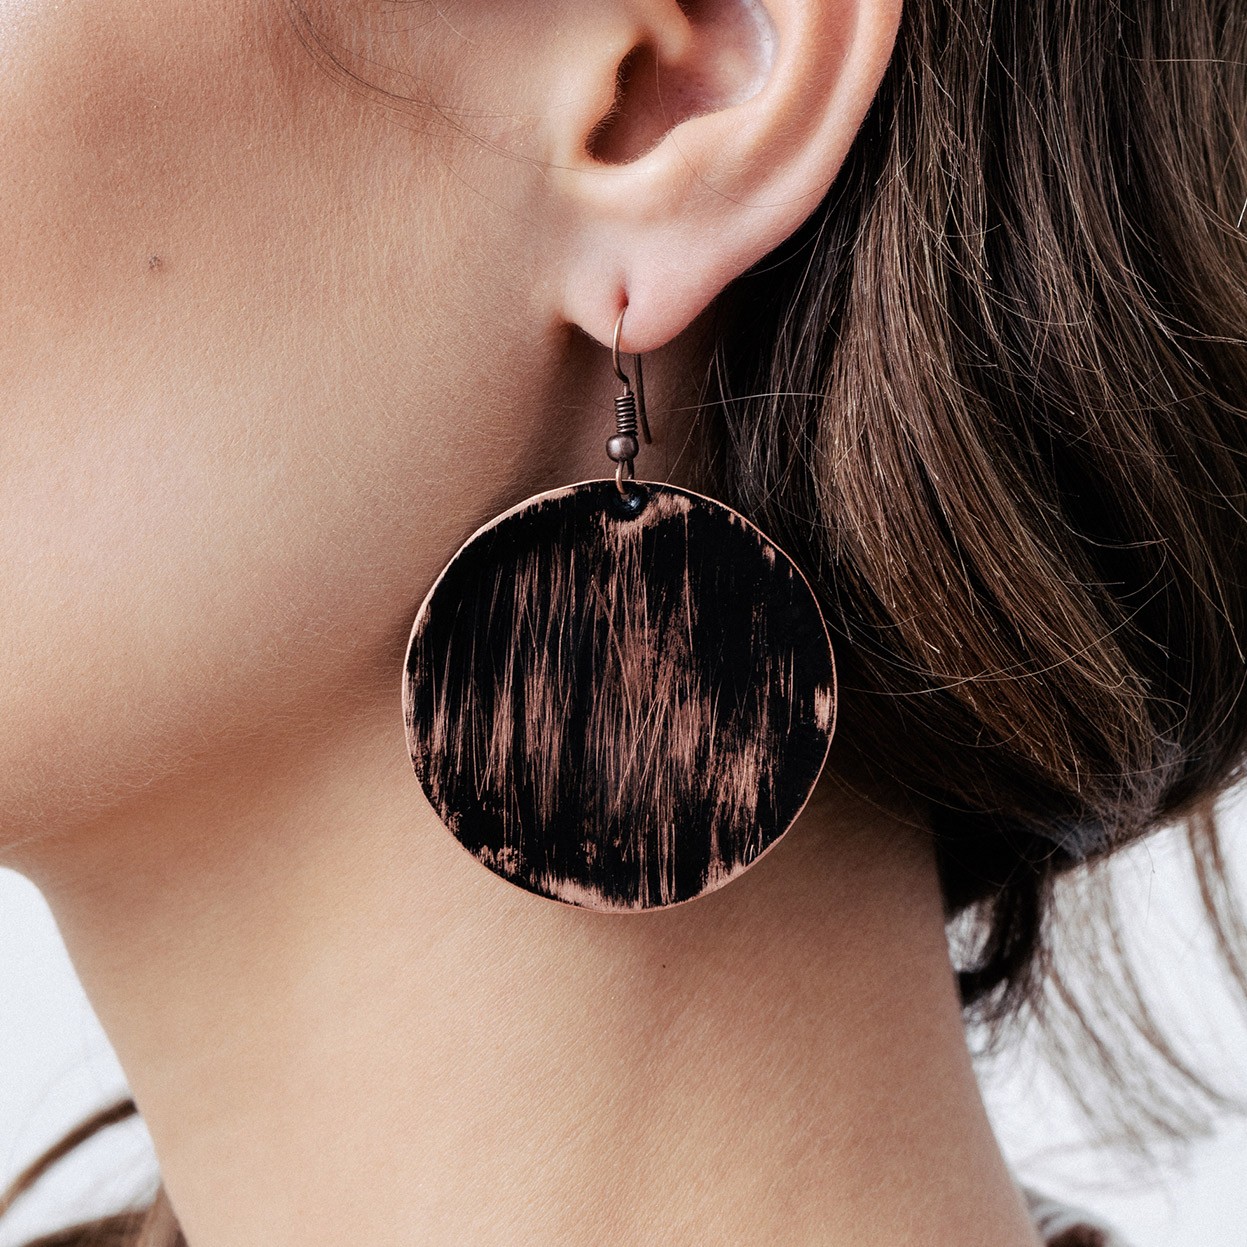 Copper earrings with leopard print